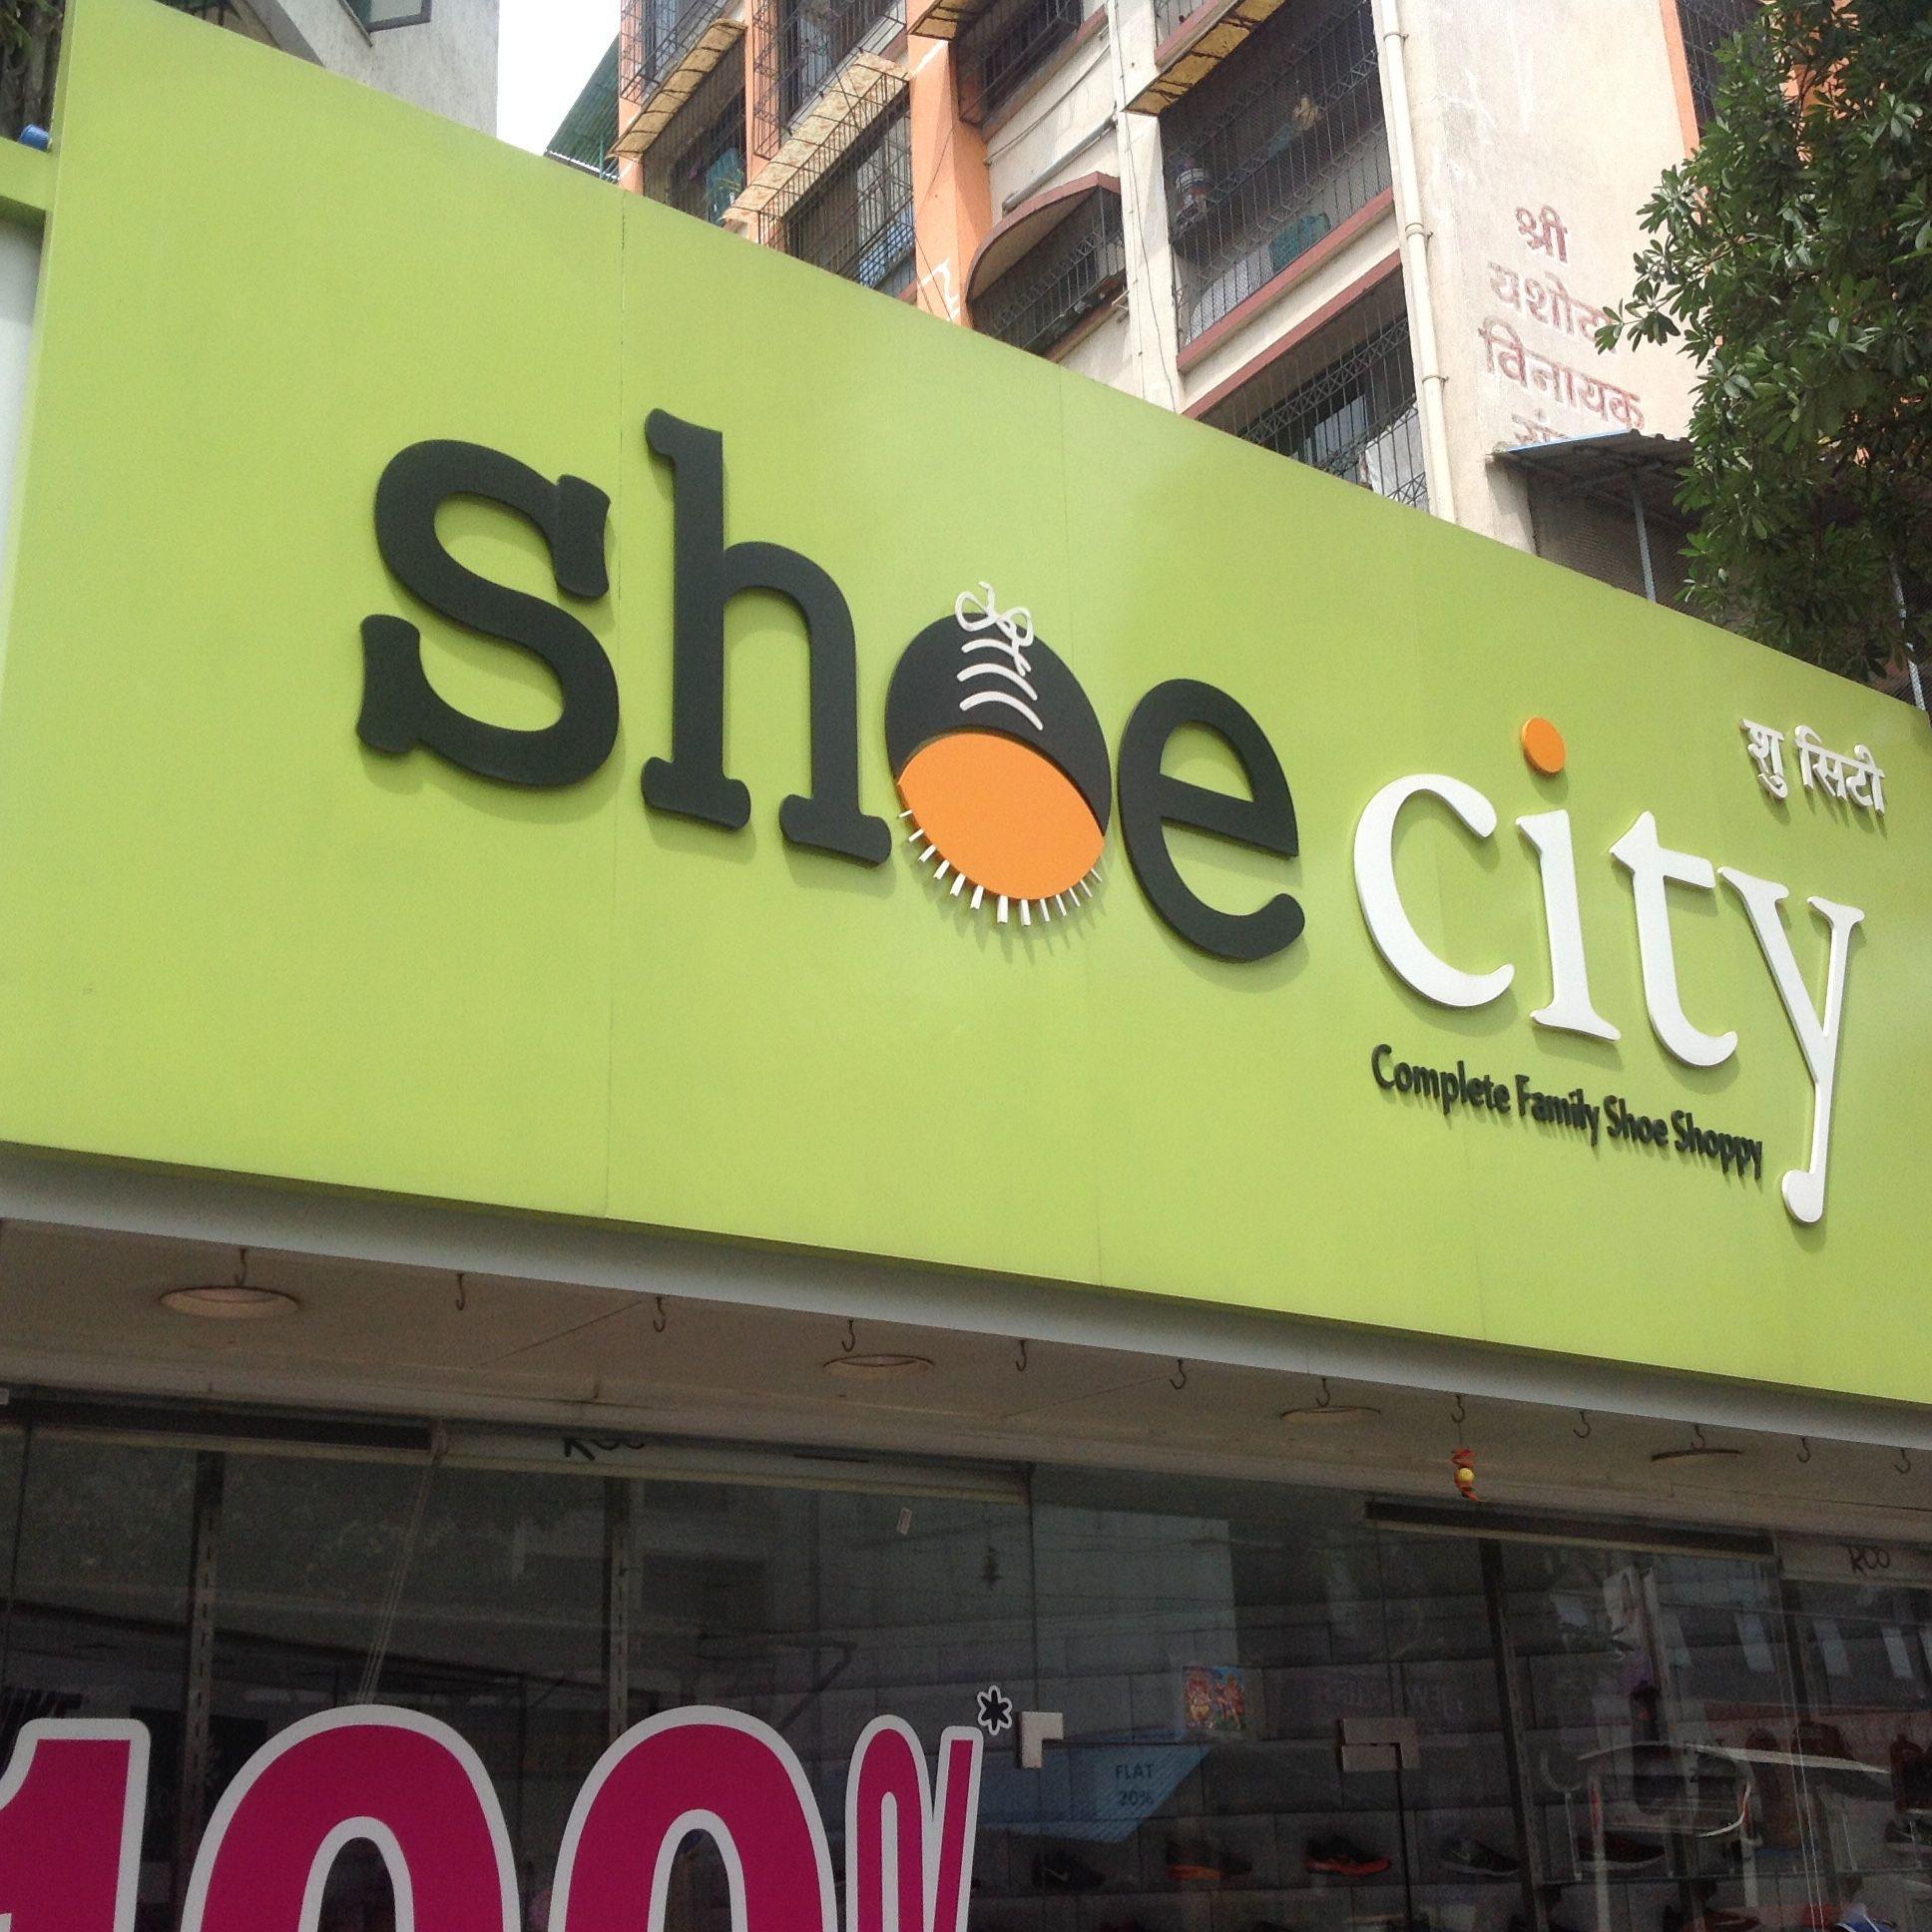 Shoe City Logo - Shoe City Photos, Kalyan City, Mumbai- Pictures & Images Gallery ...